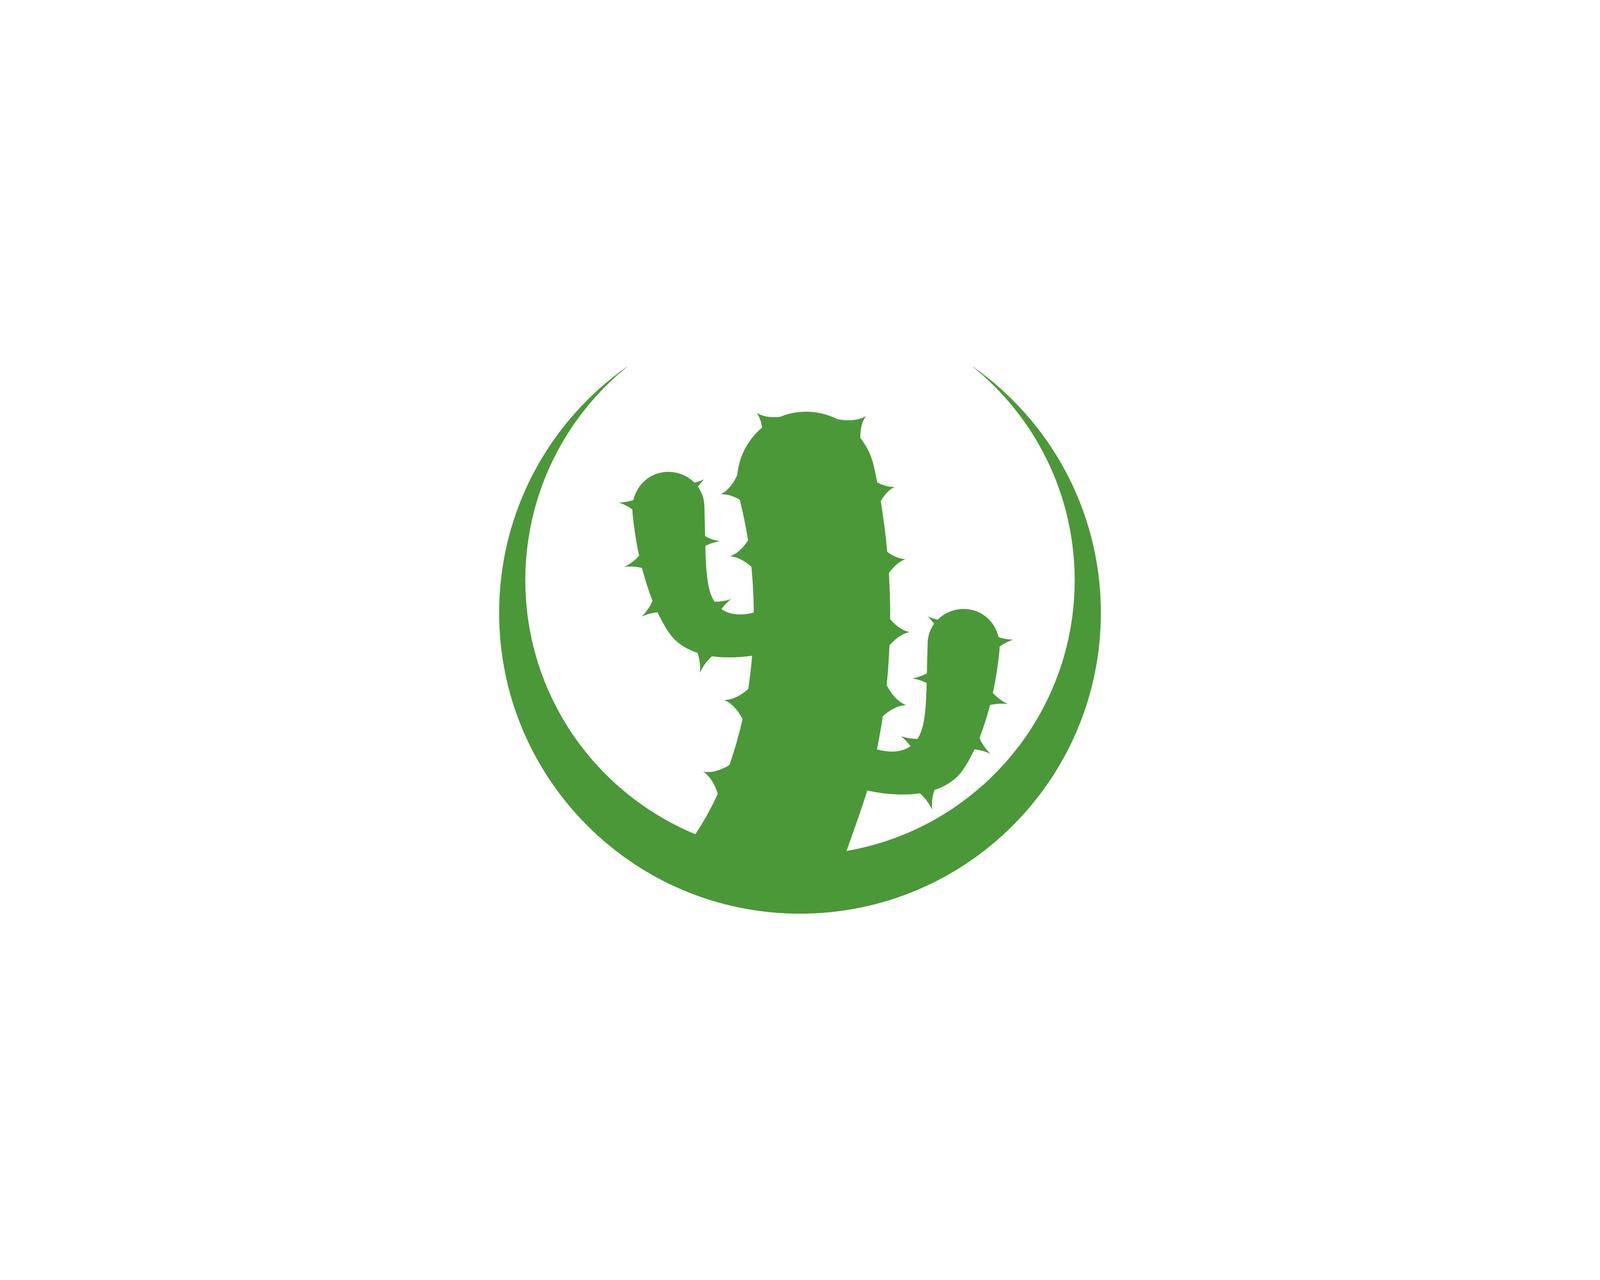 Cactus Logo template vector icon illustration design